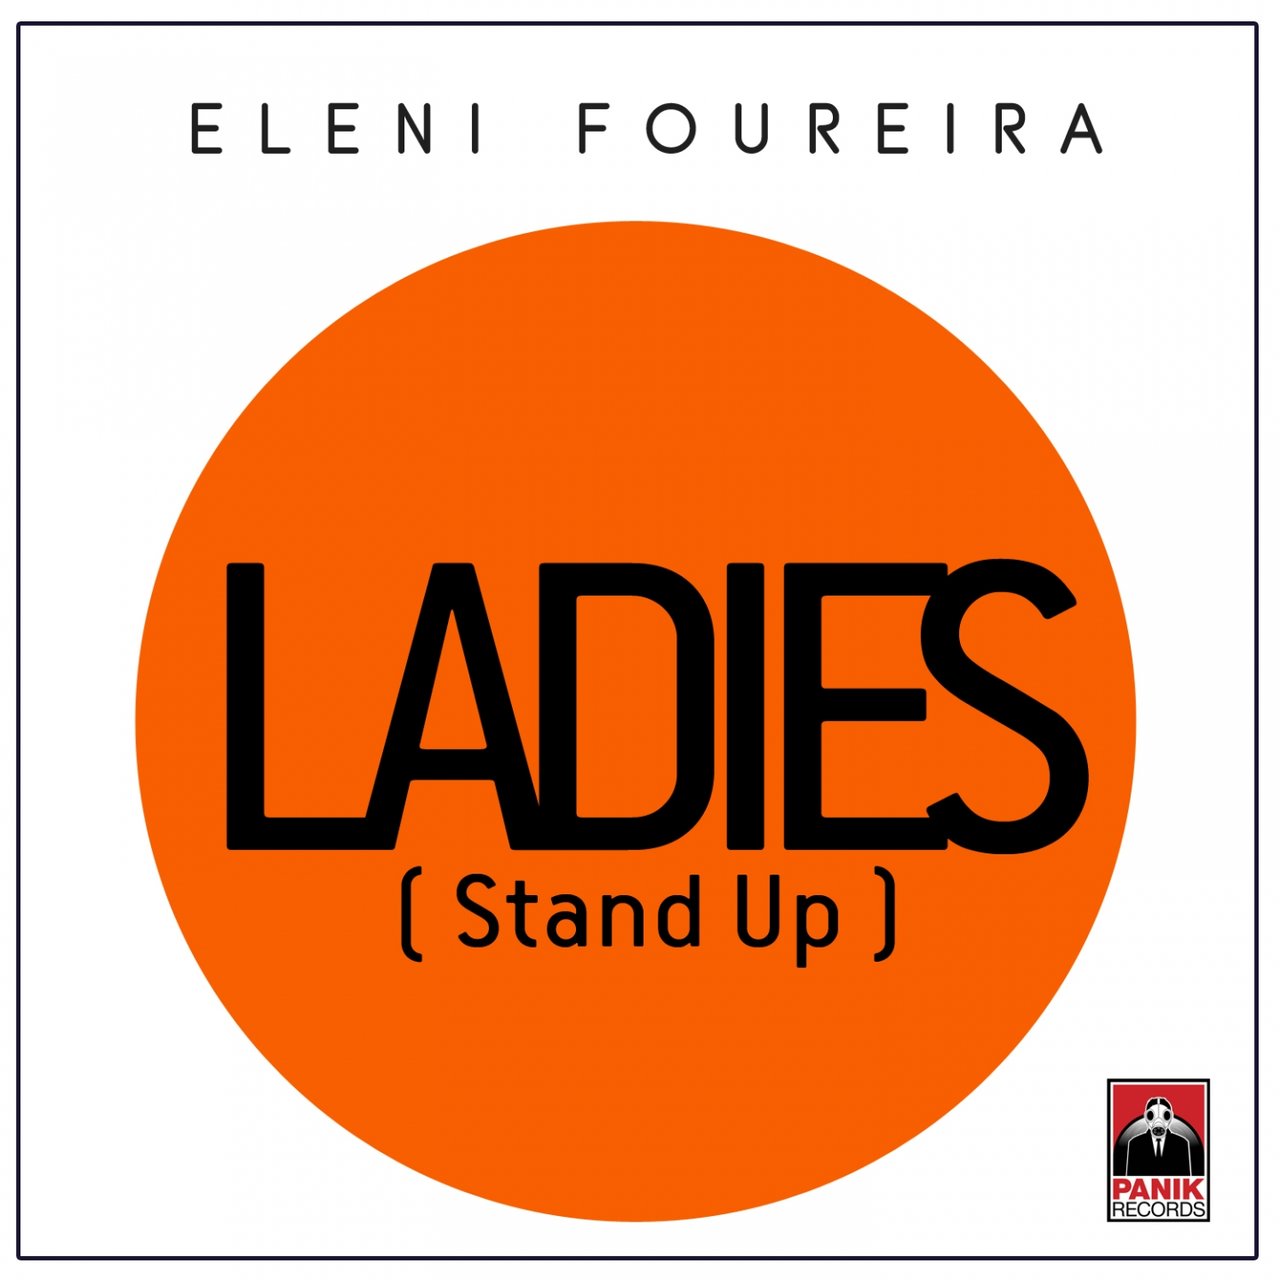 Eleni Foureira Ladies (Stand Up) cover artwork